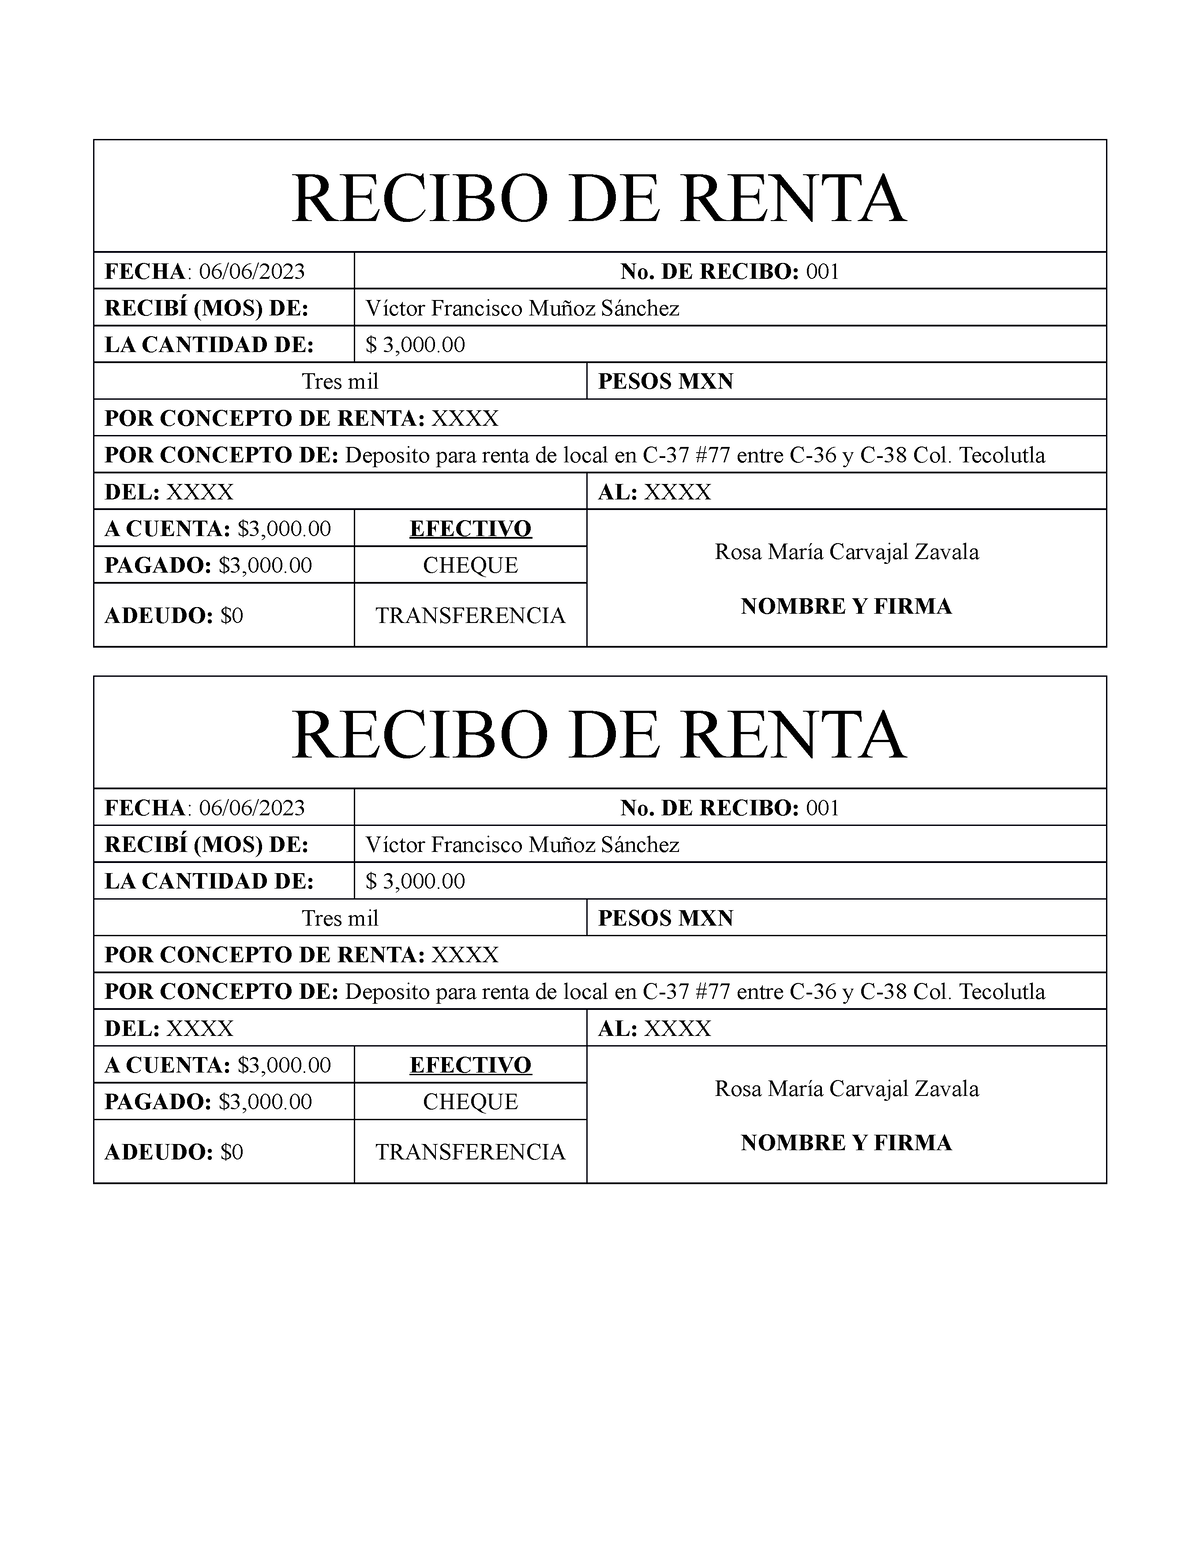 Ejemplo Recibo De Renta Recibo De Renta Fecha 06062023 No De Recibo 001 RecibÍ Mos De 5799